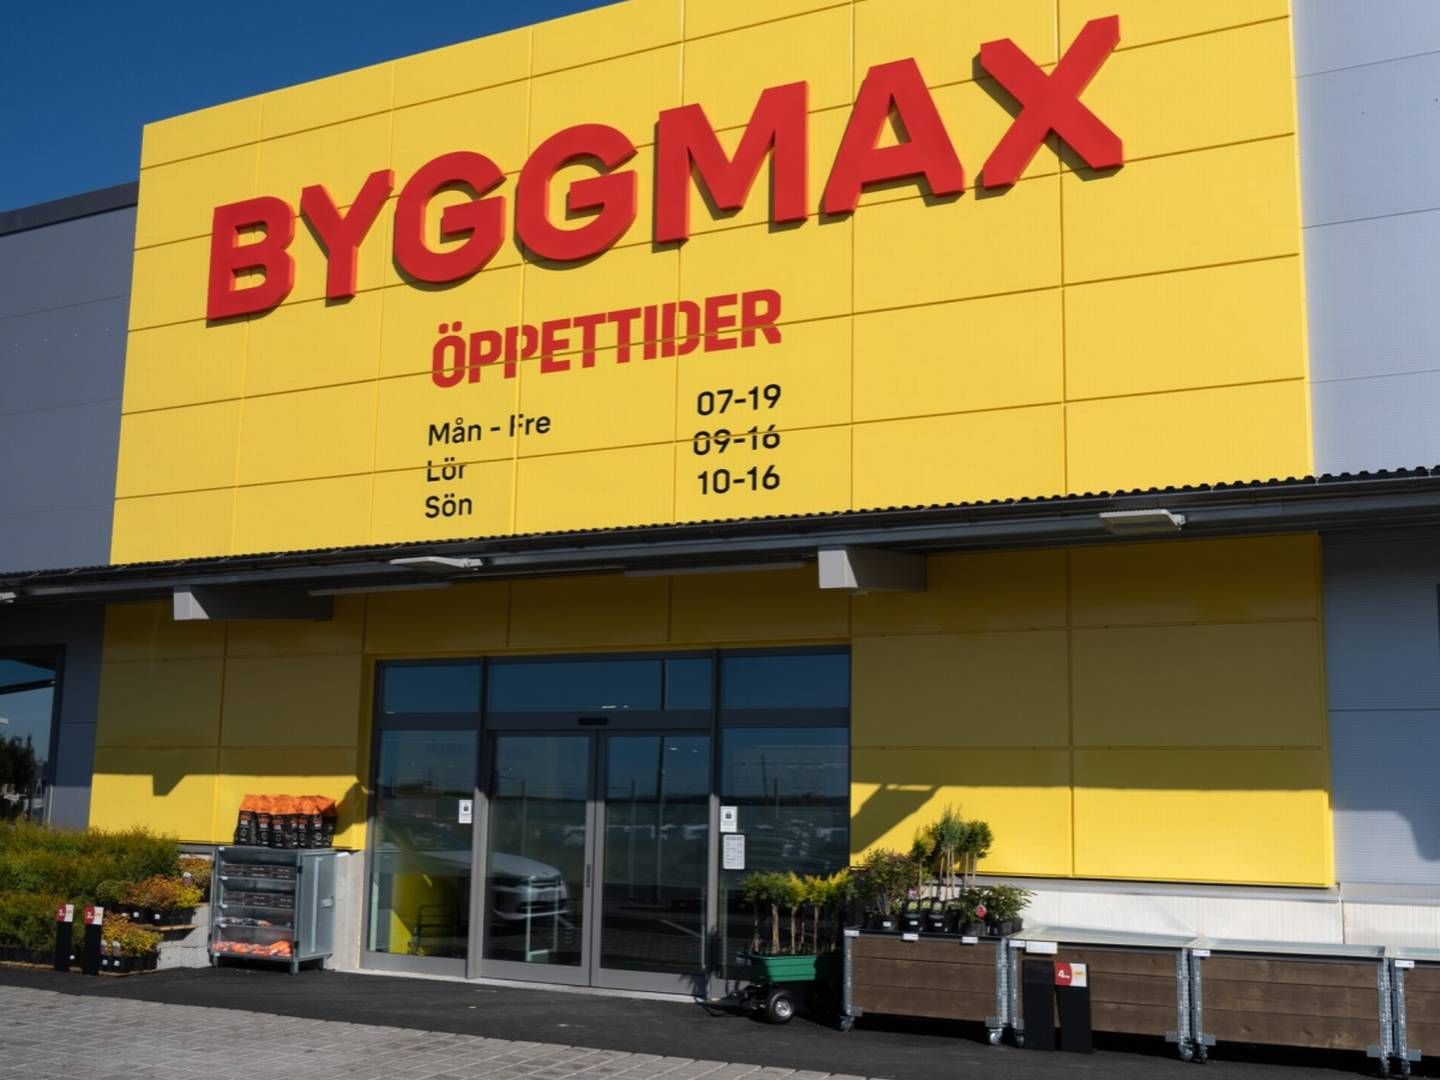 STENGTE: To Byggmax-varehus stengte i Norge i tredje kvartal. | Foto: Byggmax